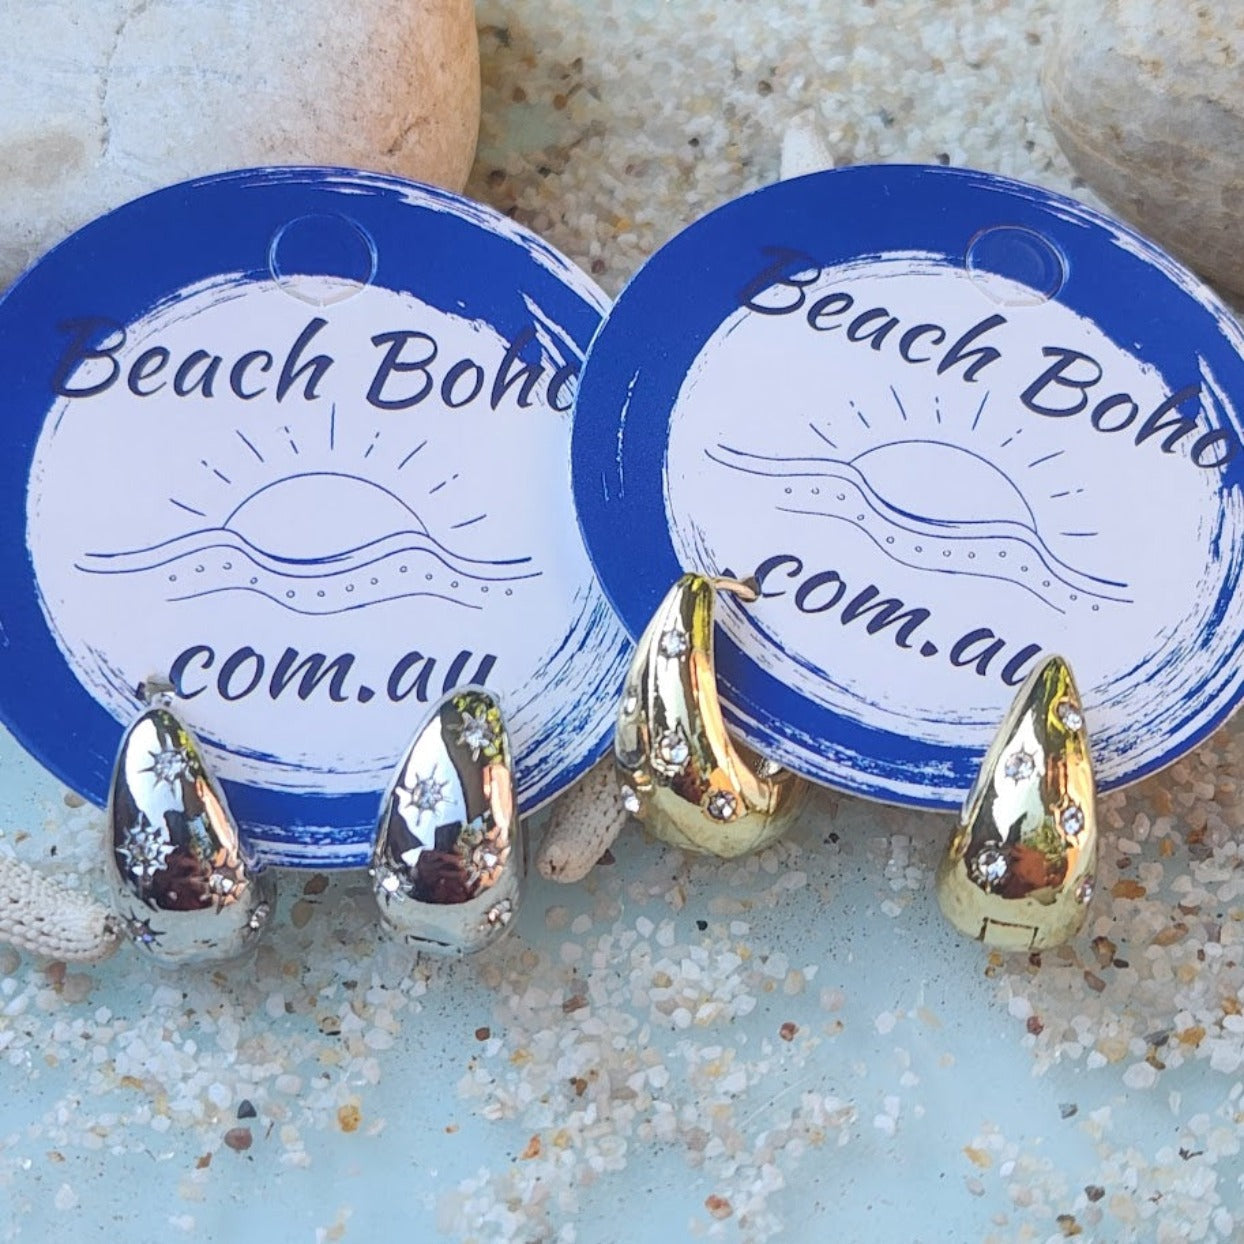 BRILLANTE HUGGIES -  GOLD & SILVER WATERPROOF CUBIC ZIRCONIA EARRINGS - Premium earrings from www.beachboho.com.au - Just $45! Shop now at www.beachboho.com.au